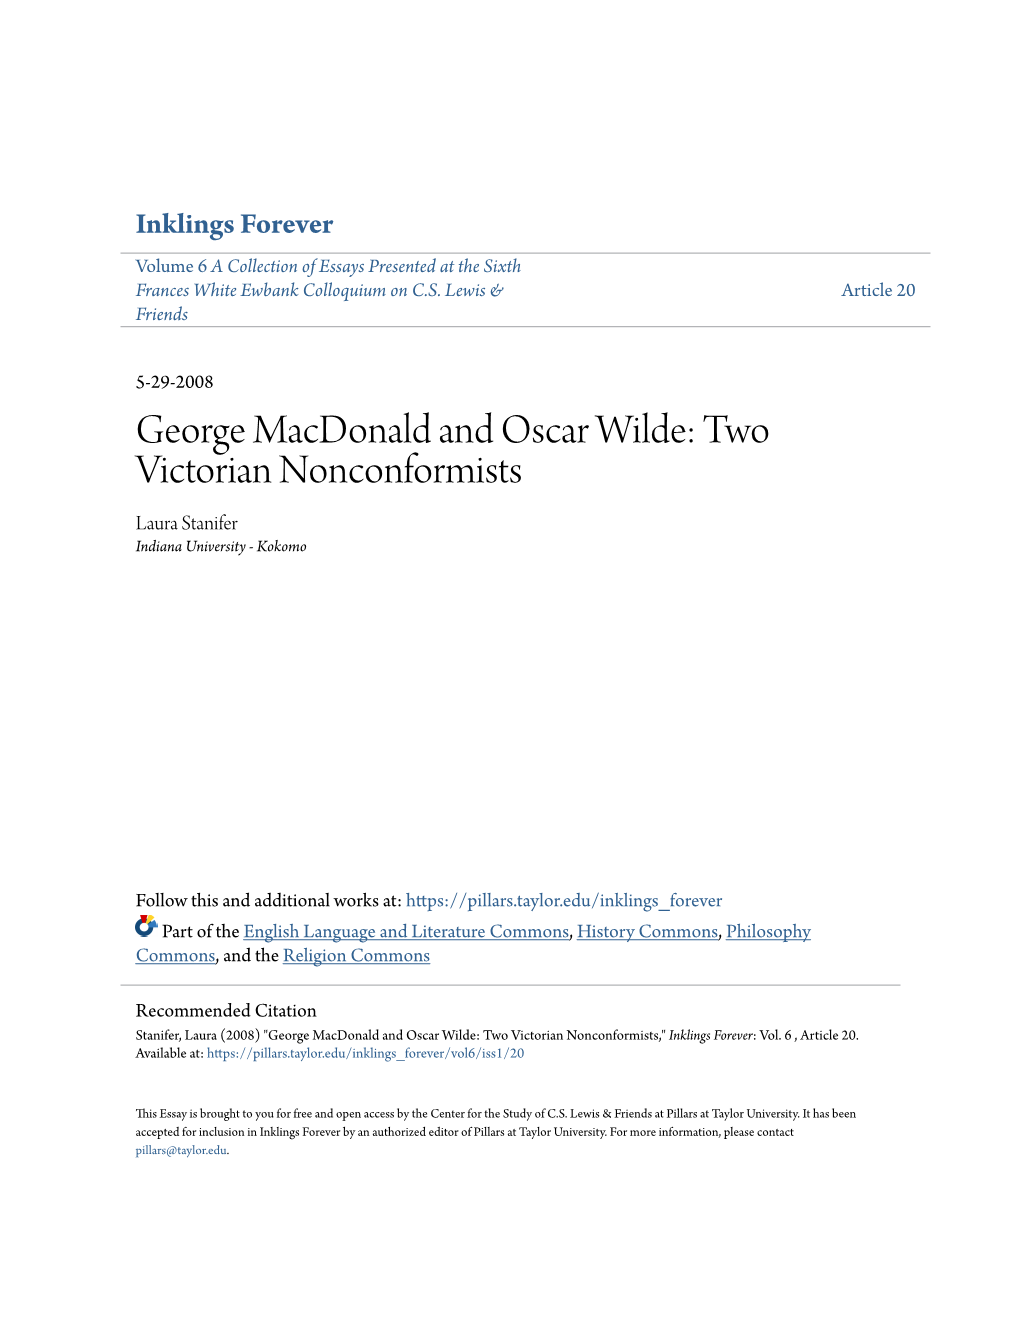 George Macdonald and Oscar Wilde: Two Victorian Nonconformists Laura Stanifer Indiana University - Kokomo